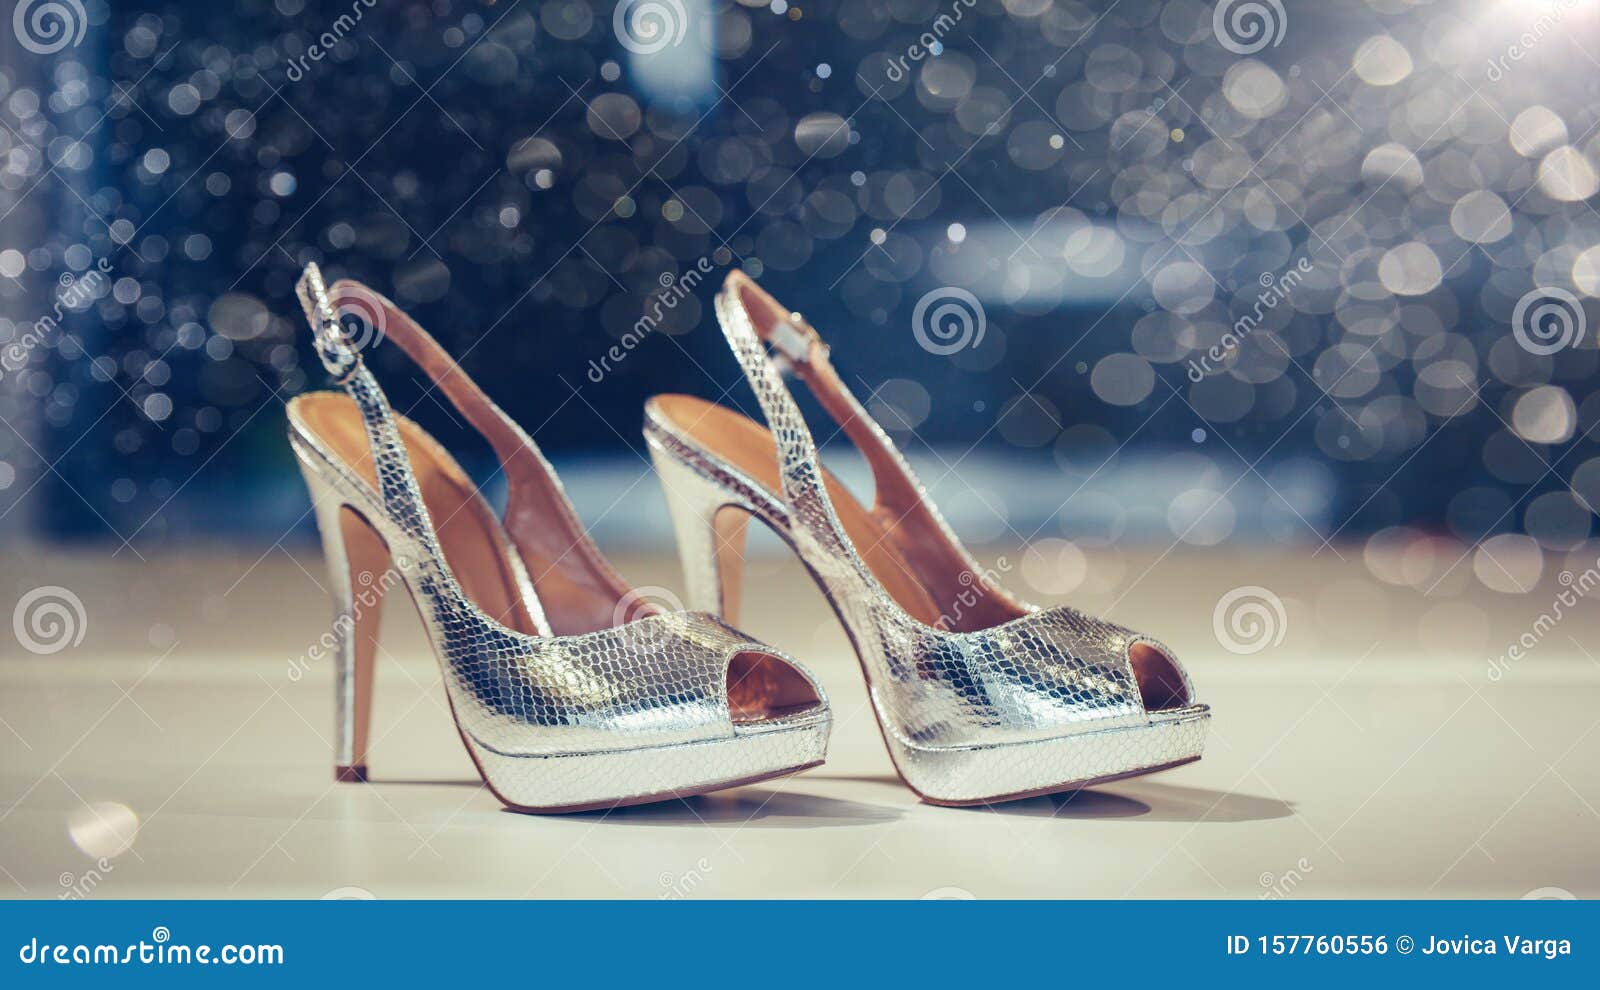 fashion shoes online shopping